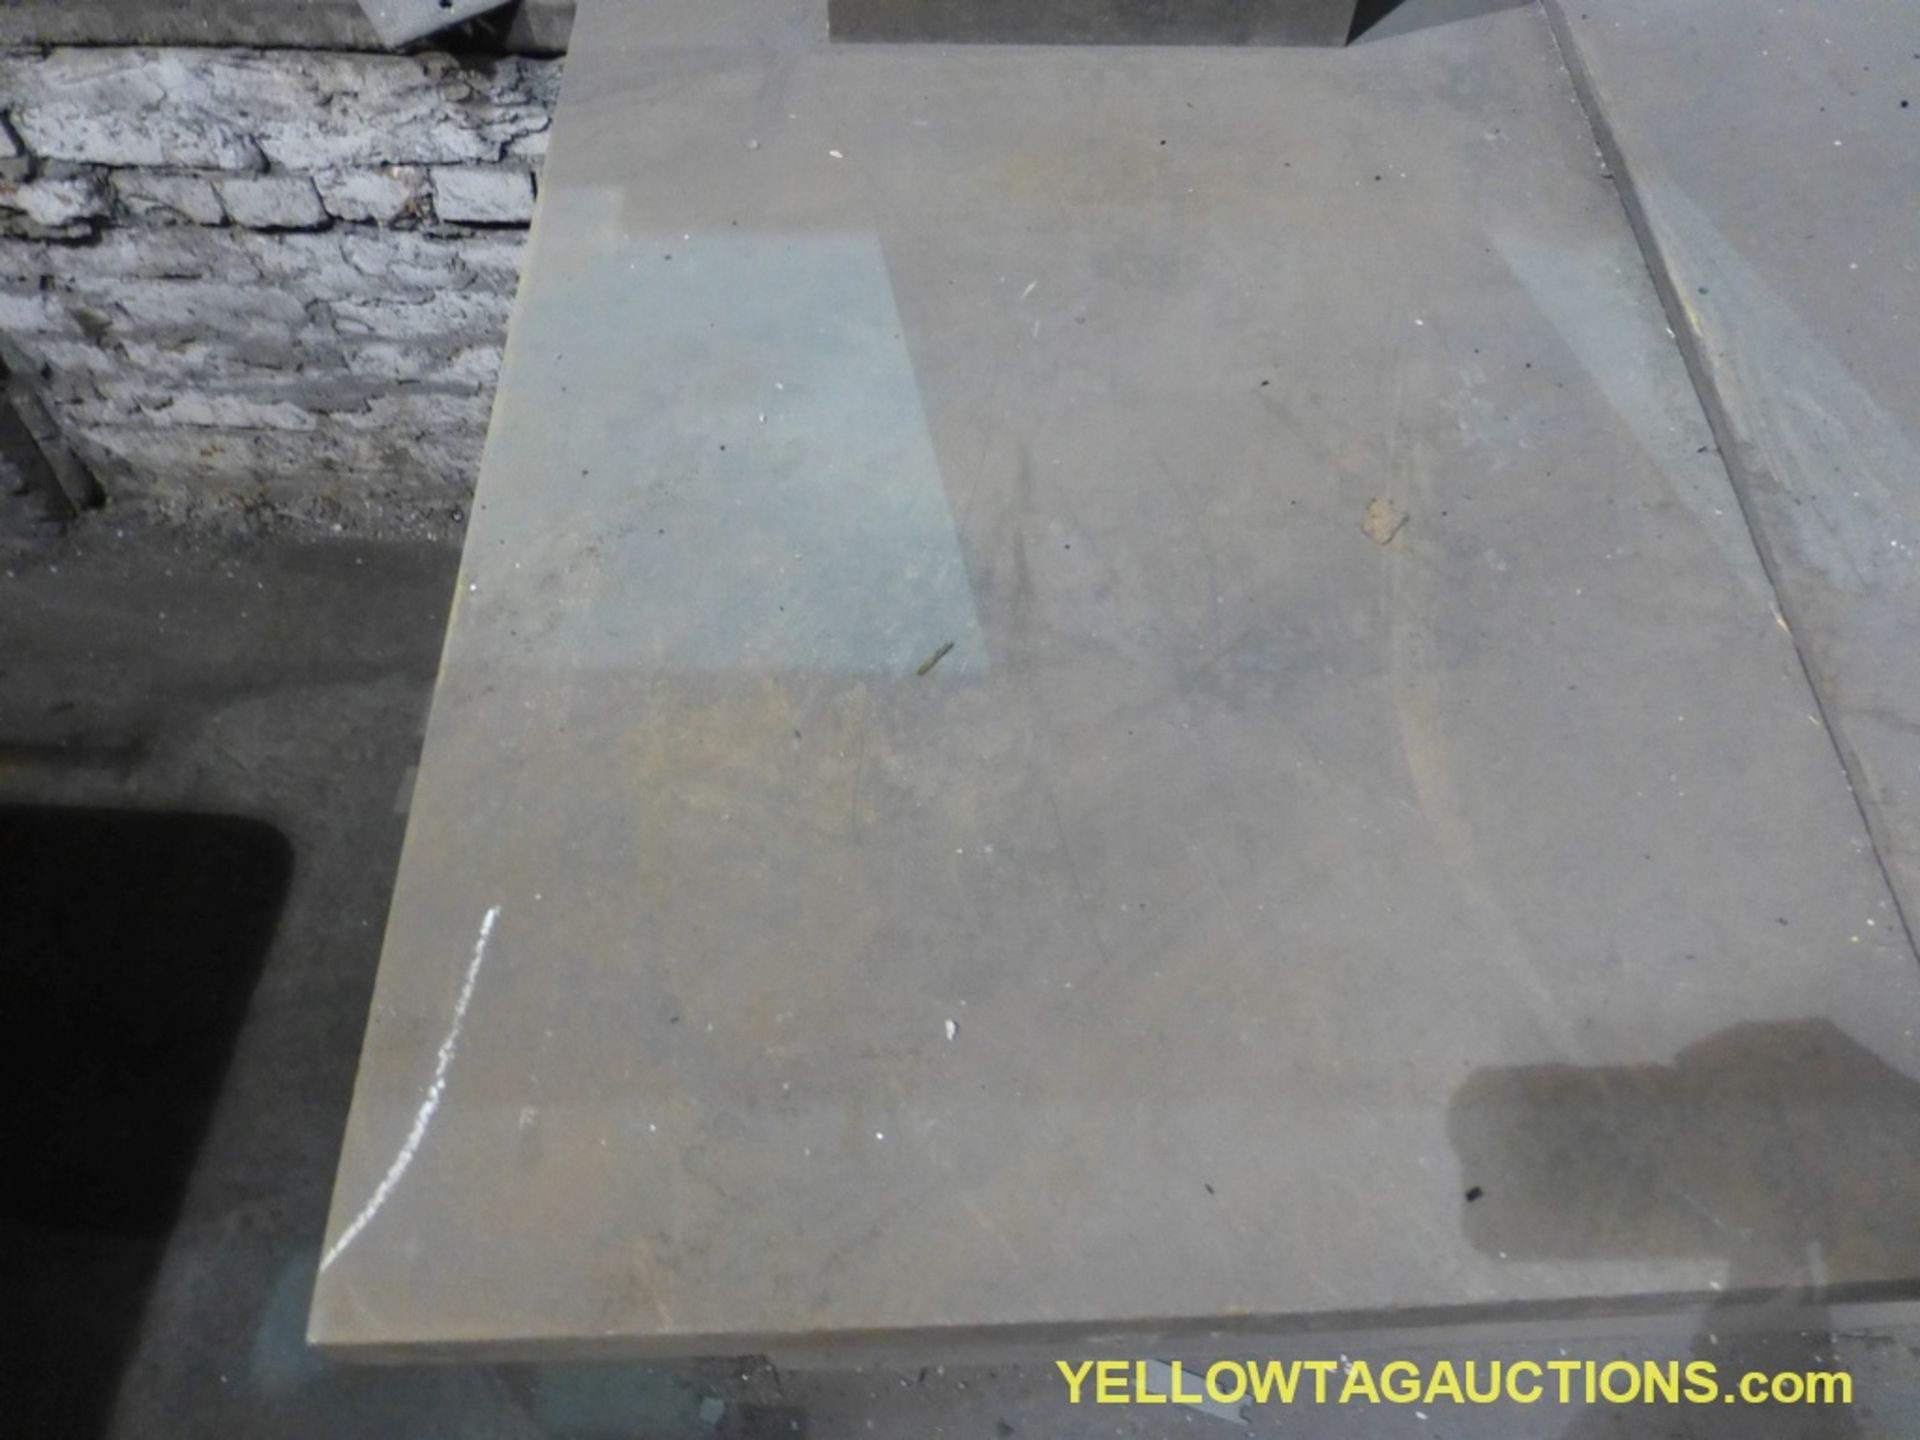 Metal Work/Welding Table | 30-1/2"T x 36"W x 72"L - Image 3 of 4